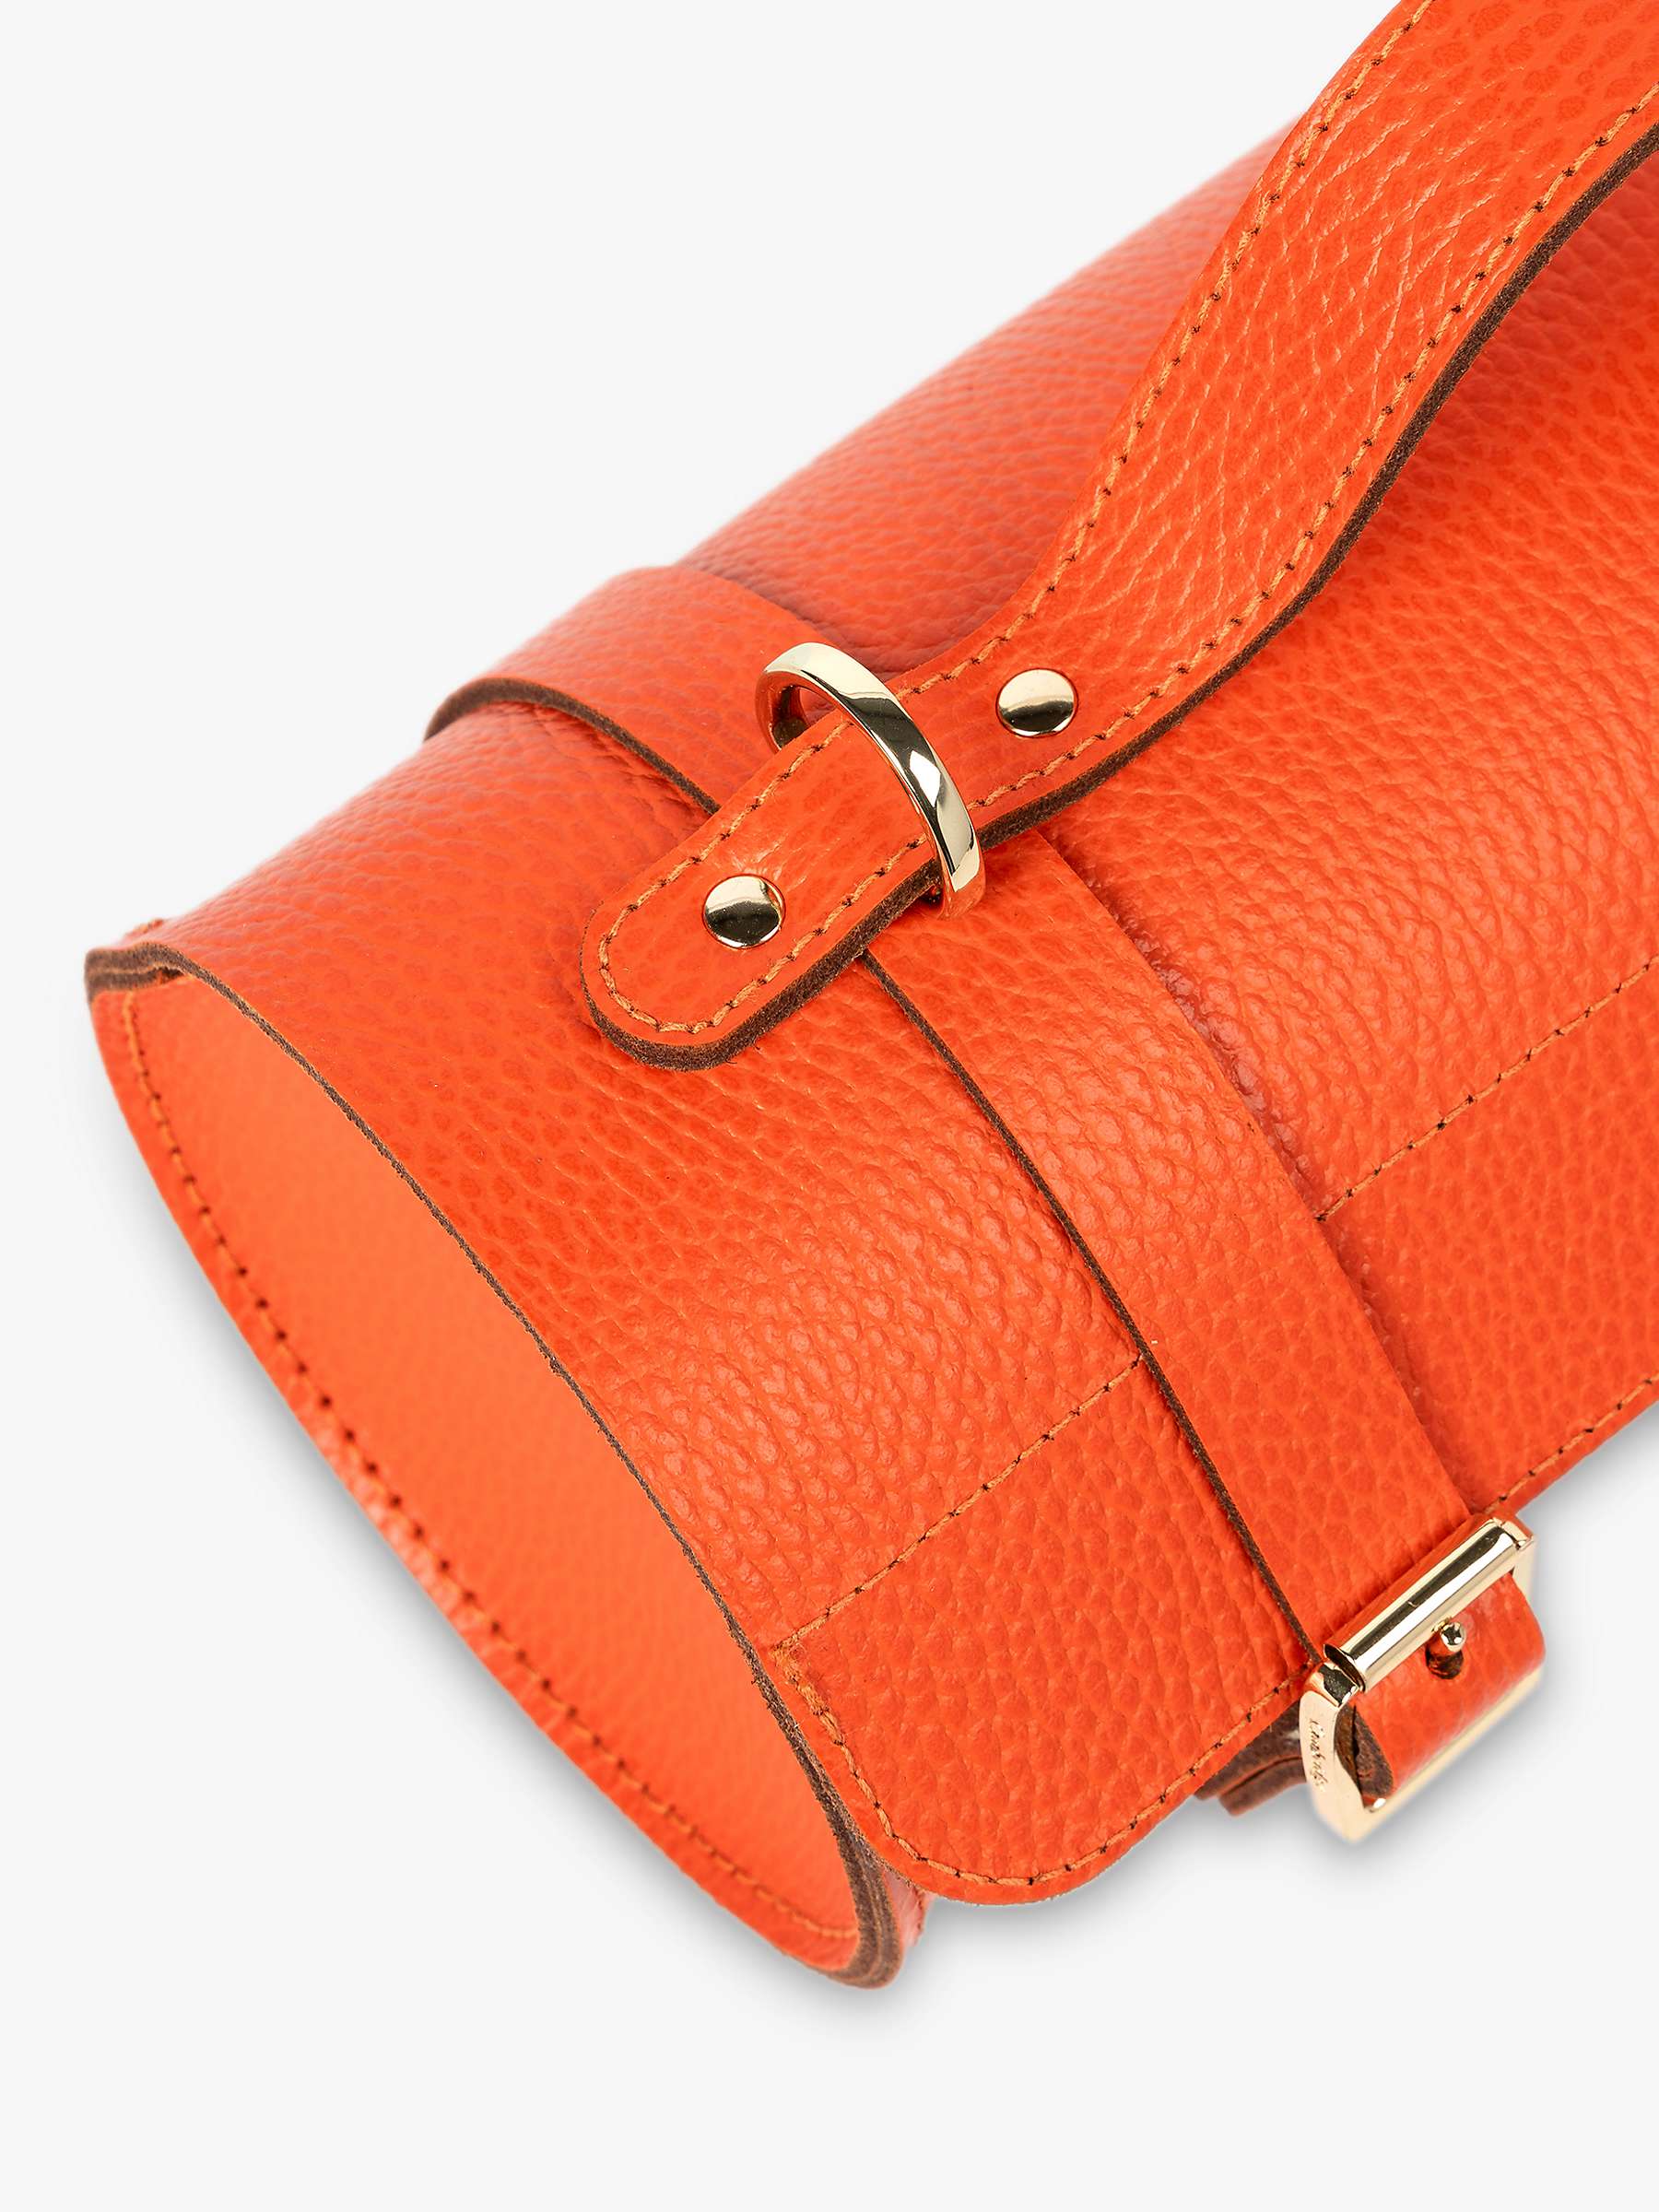 Buy Cambridge Satchel Bowls Leather Grab Bag Online at johnlewis.com